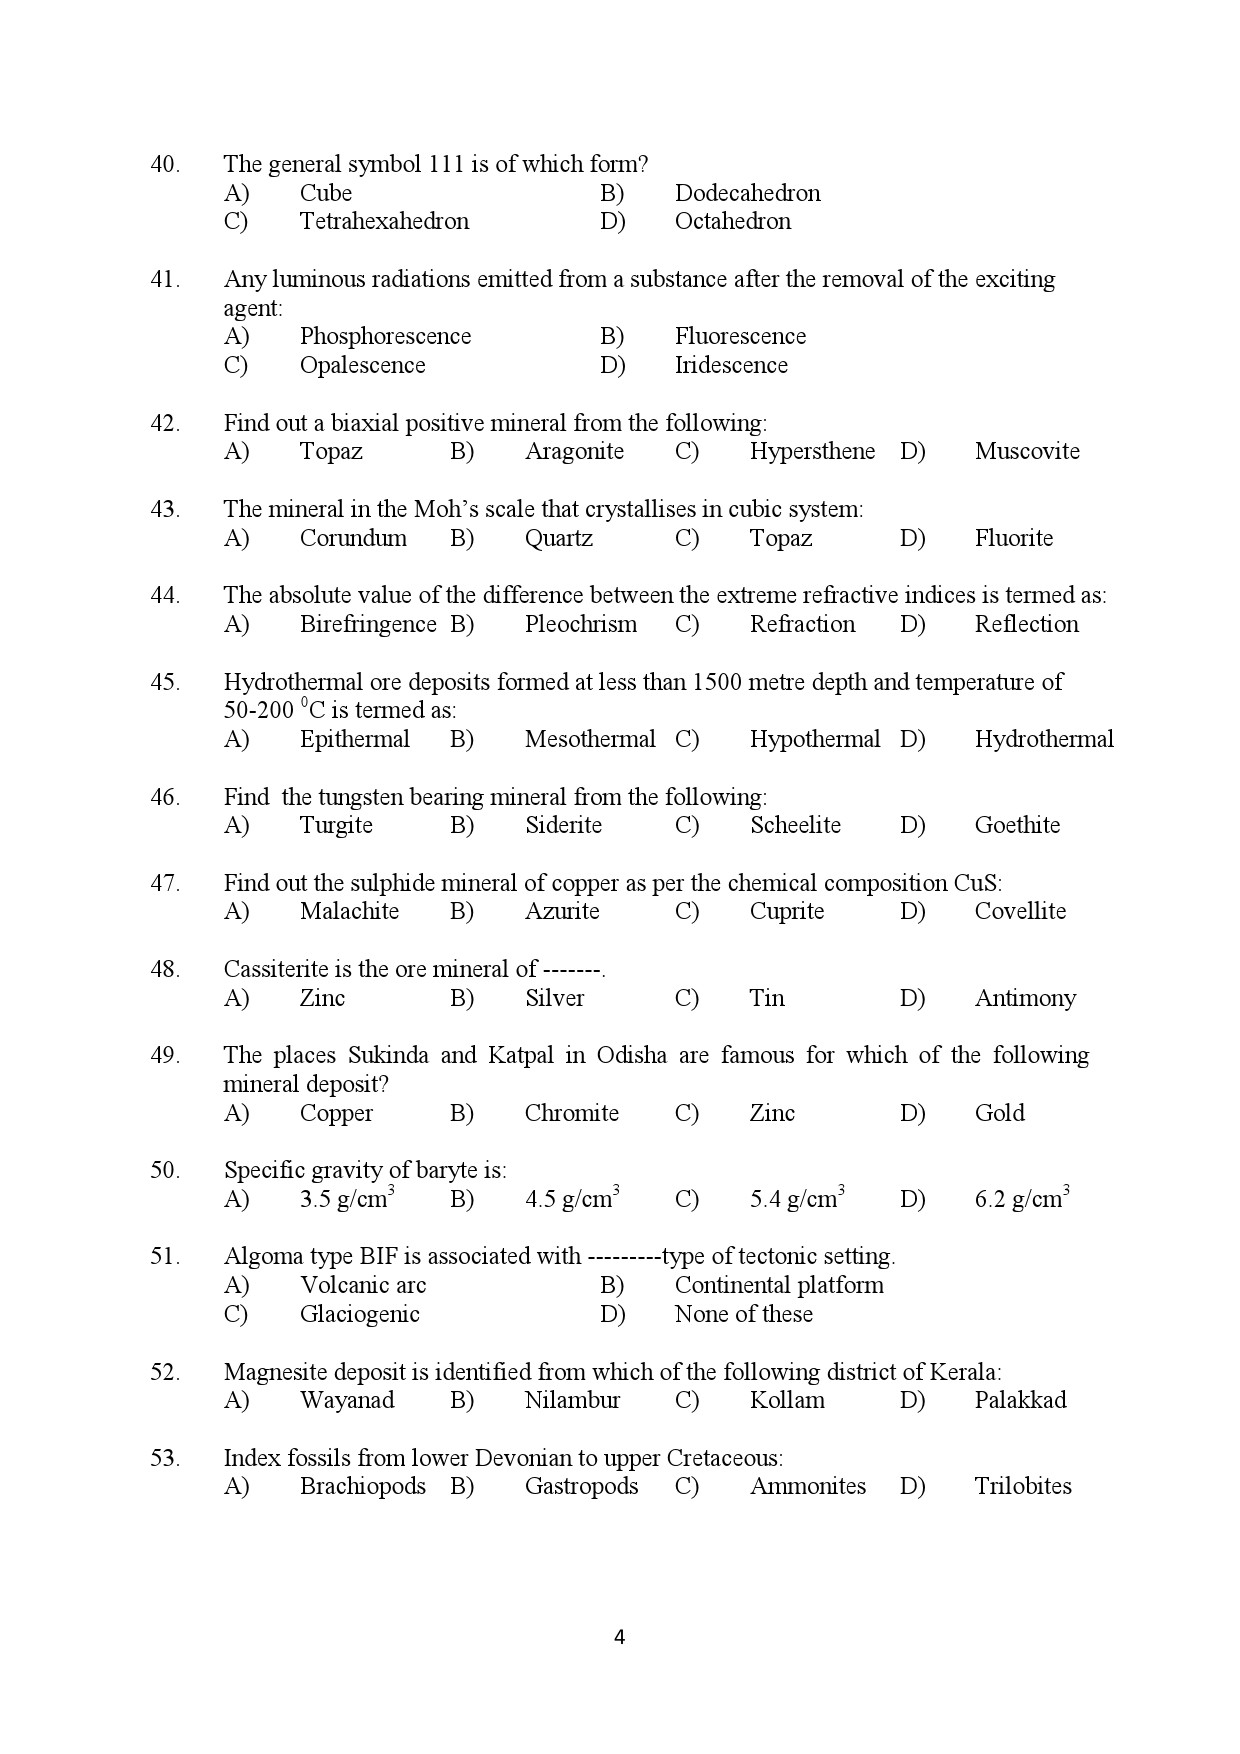 Kerala SET Geology Exam Question Paper February 2020 4